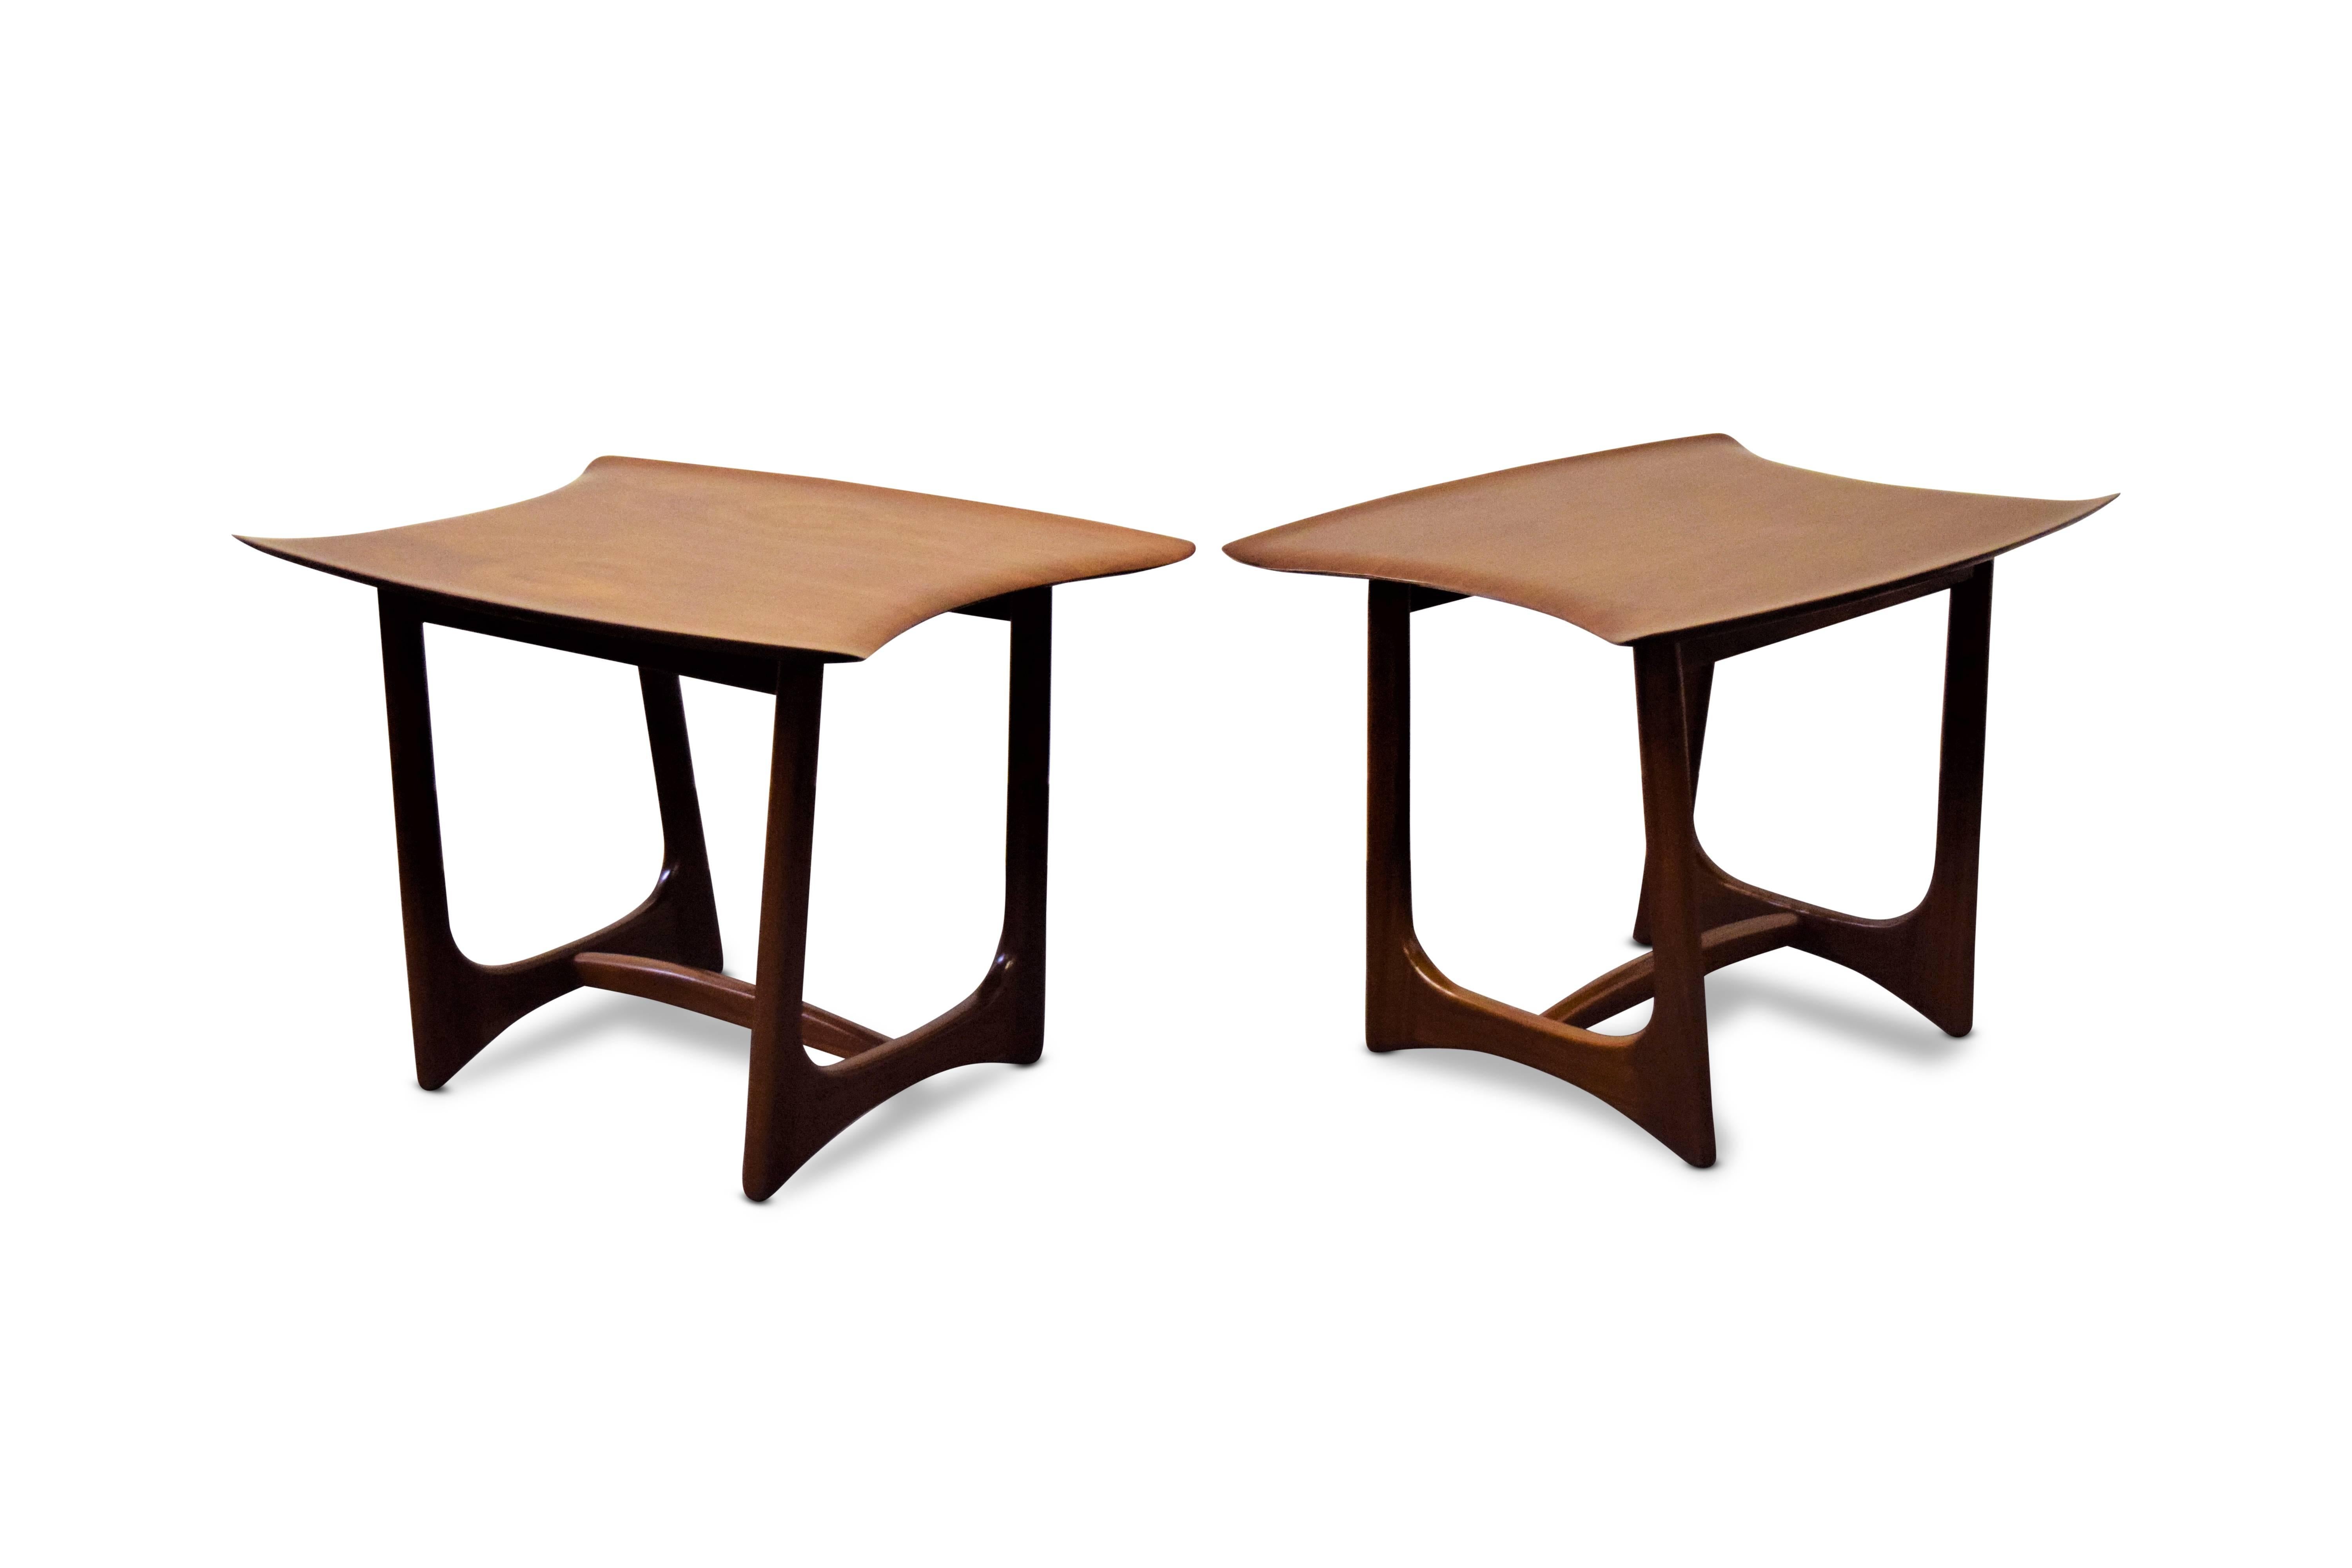 20th Century Adrian Pearsall Craft Associates 'Stingray' Tables